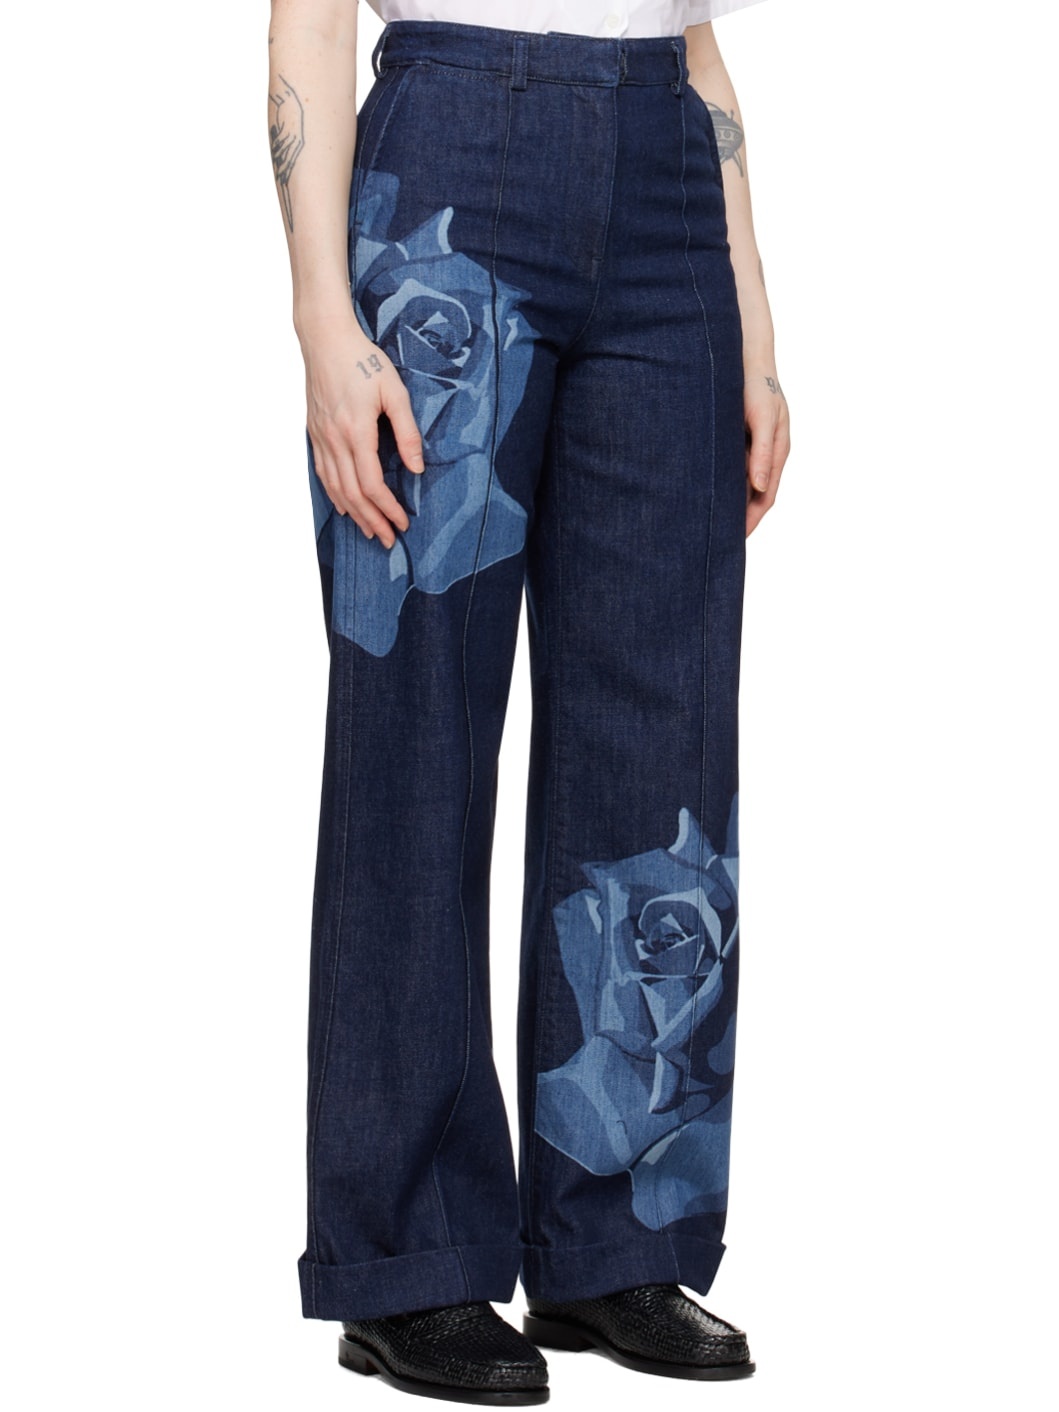 Indigo Kenzo Paris Rose Tailored Jeans - 2